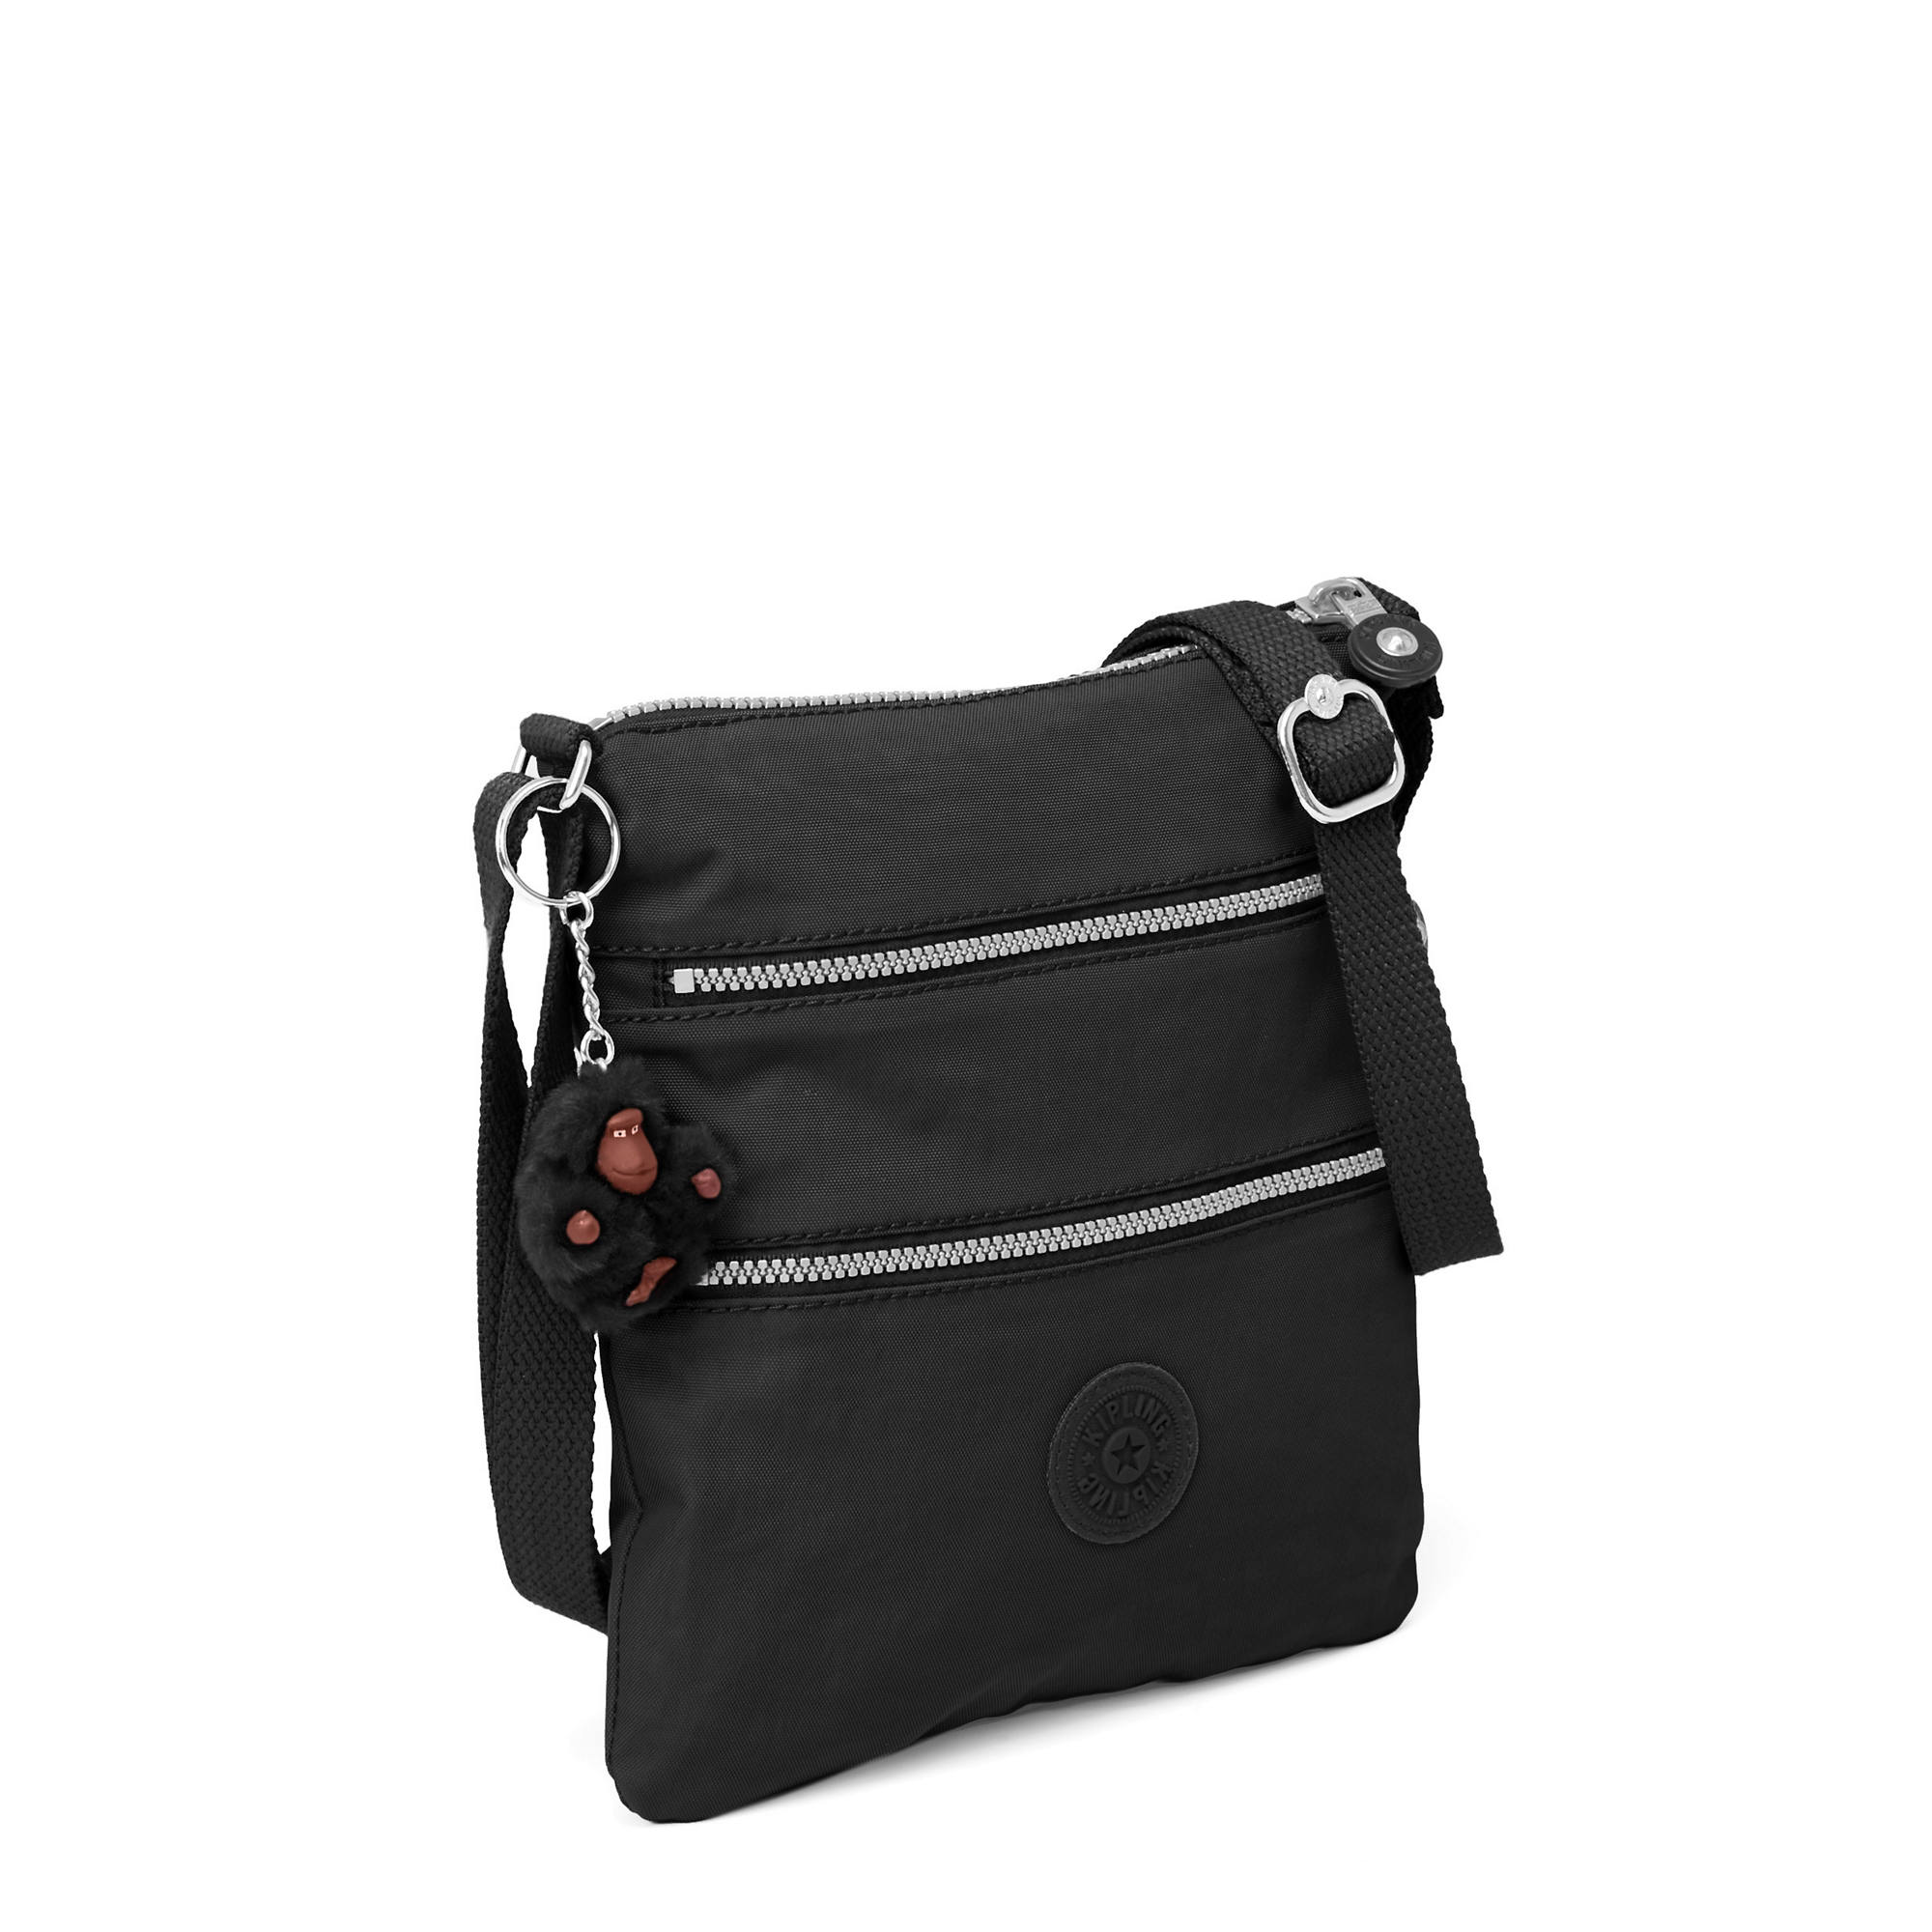 Kipling Keiko Crossbody Mini Bag | eBay